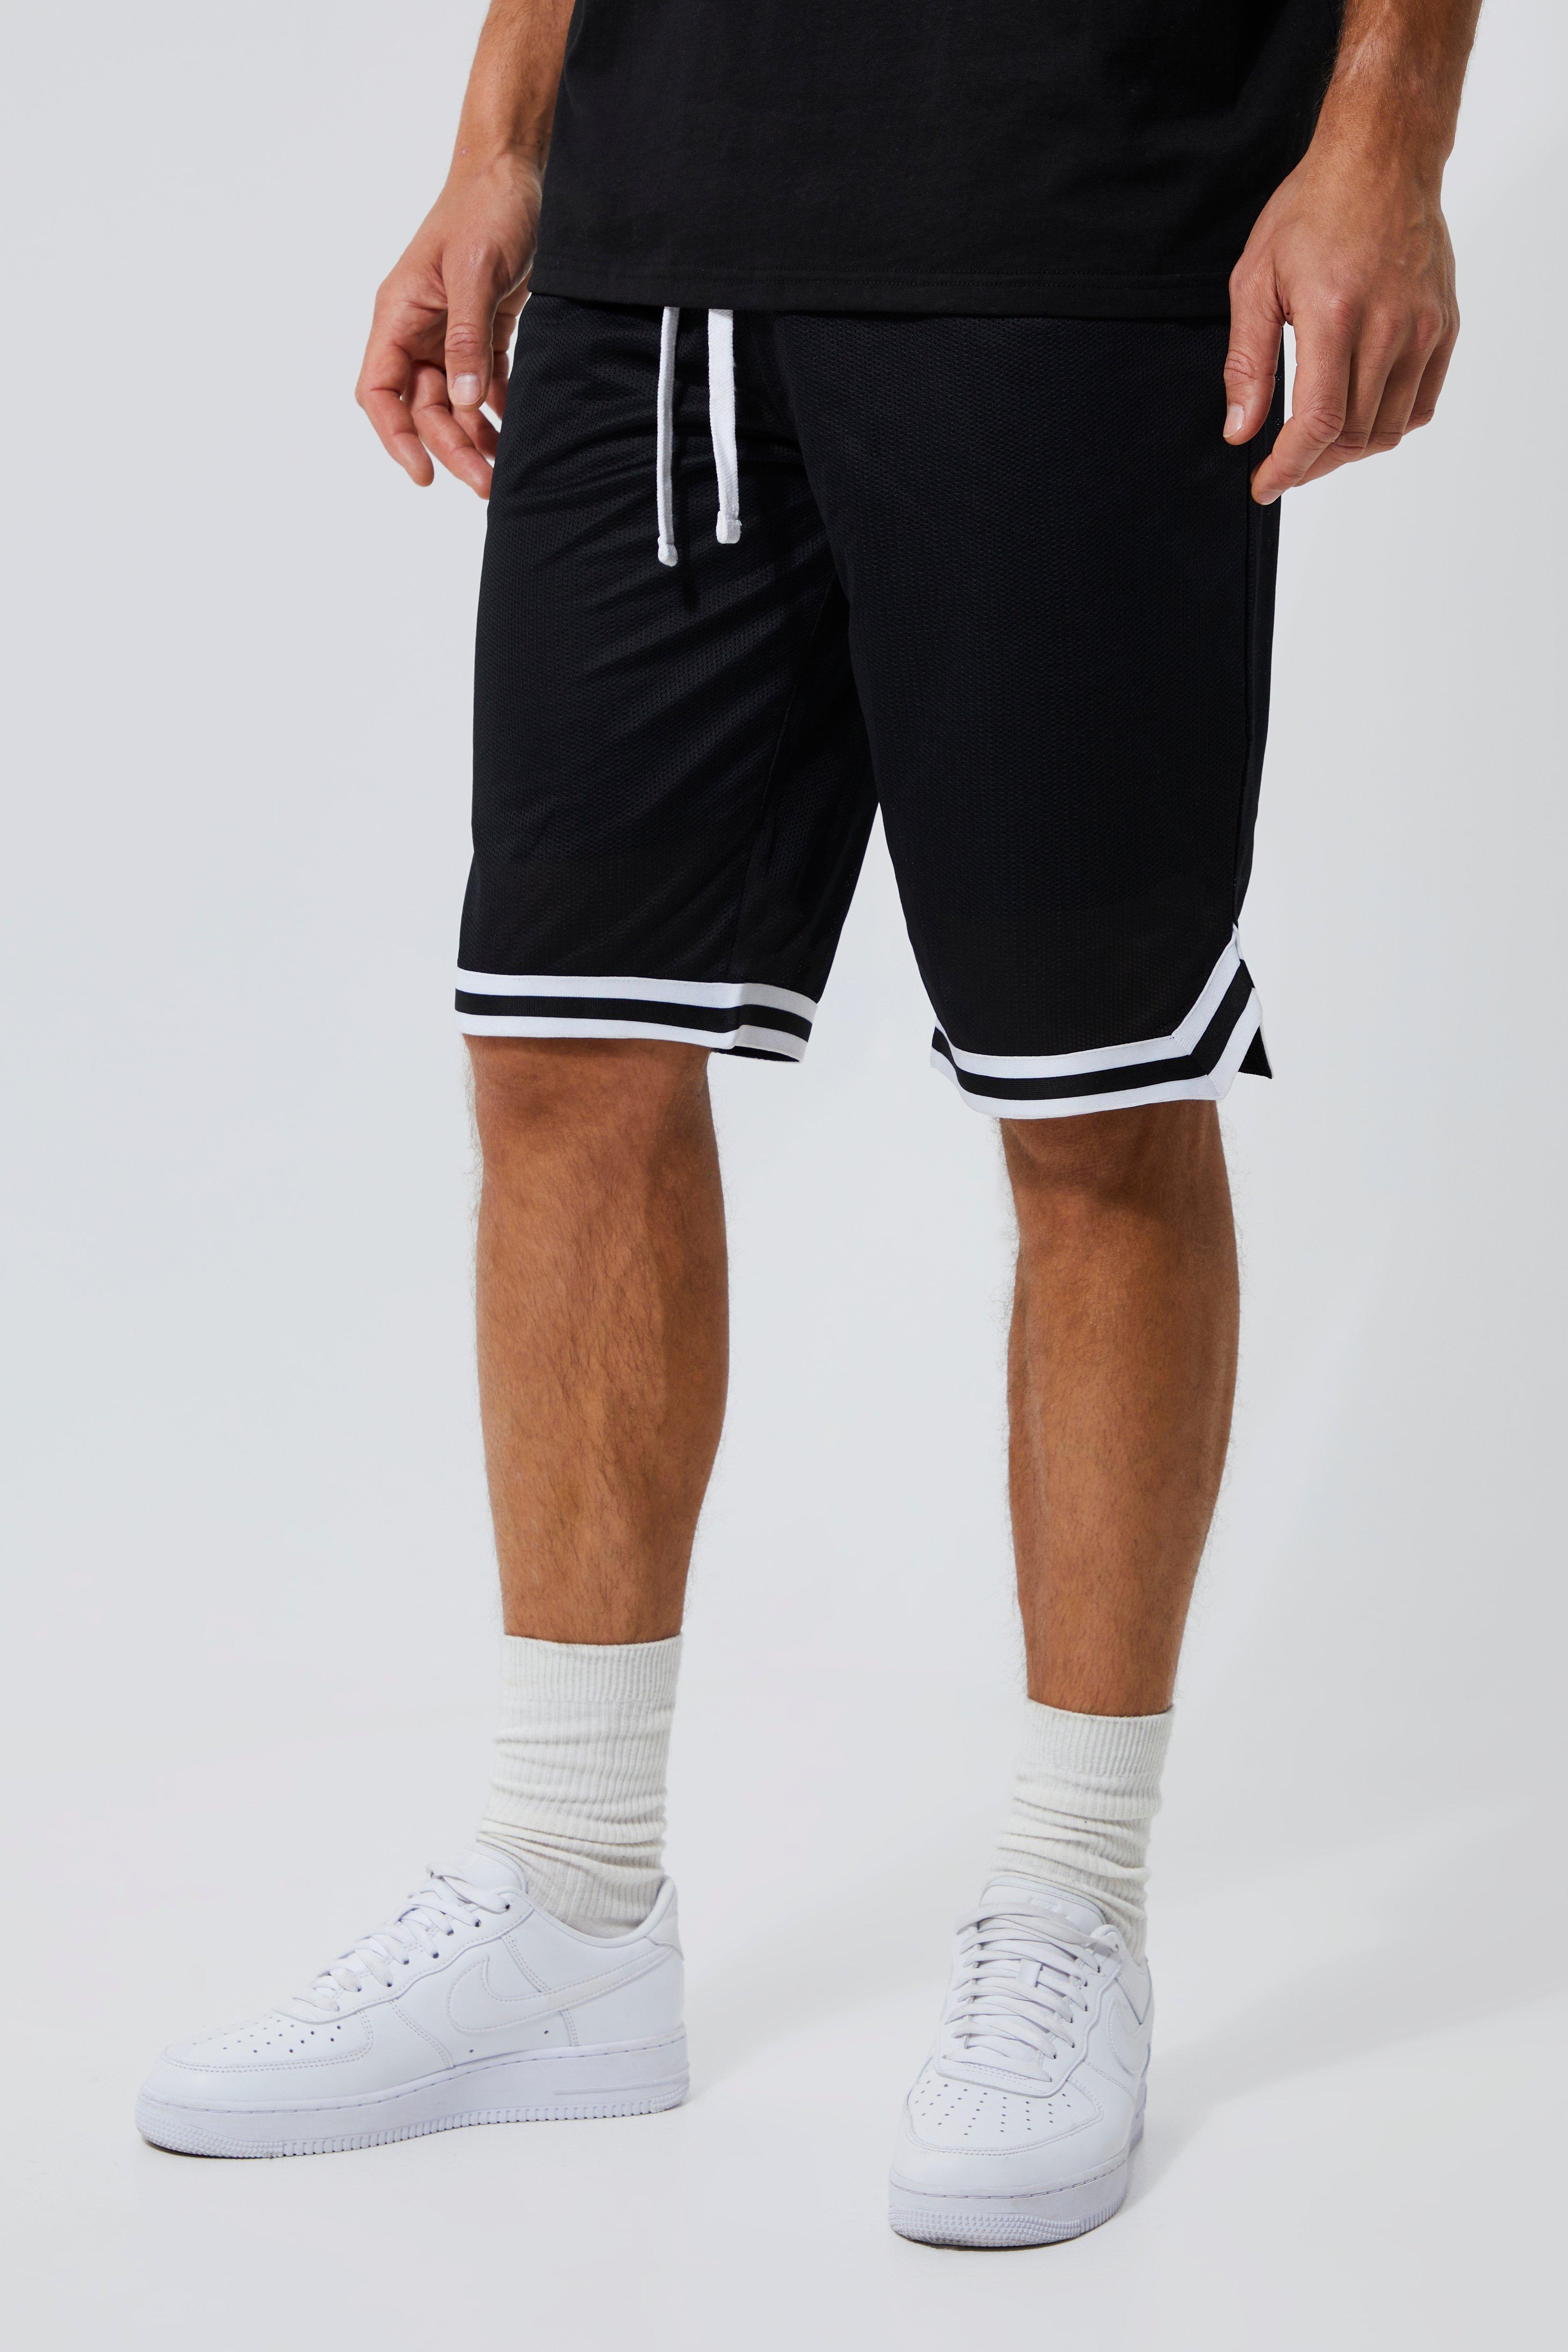 Mens Black Tall Mesh Basketball Shorts With Tape, Black